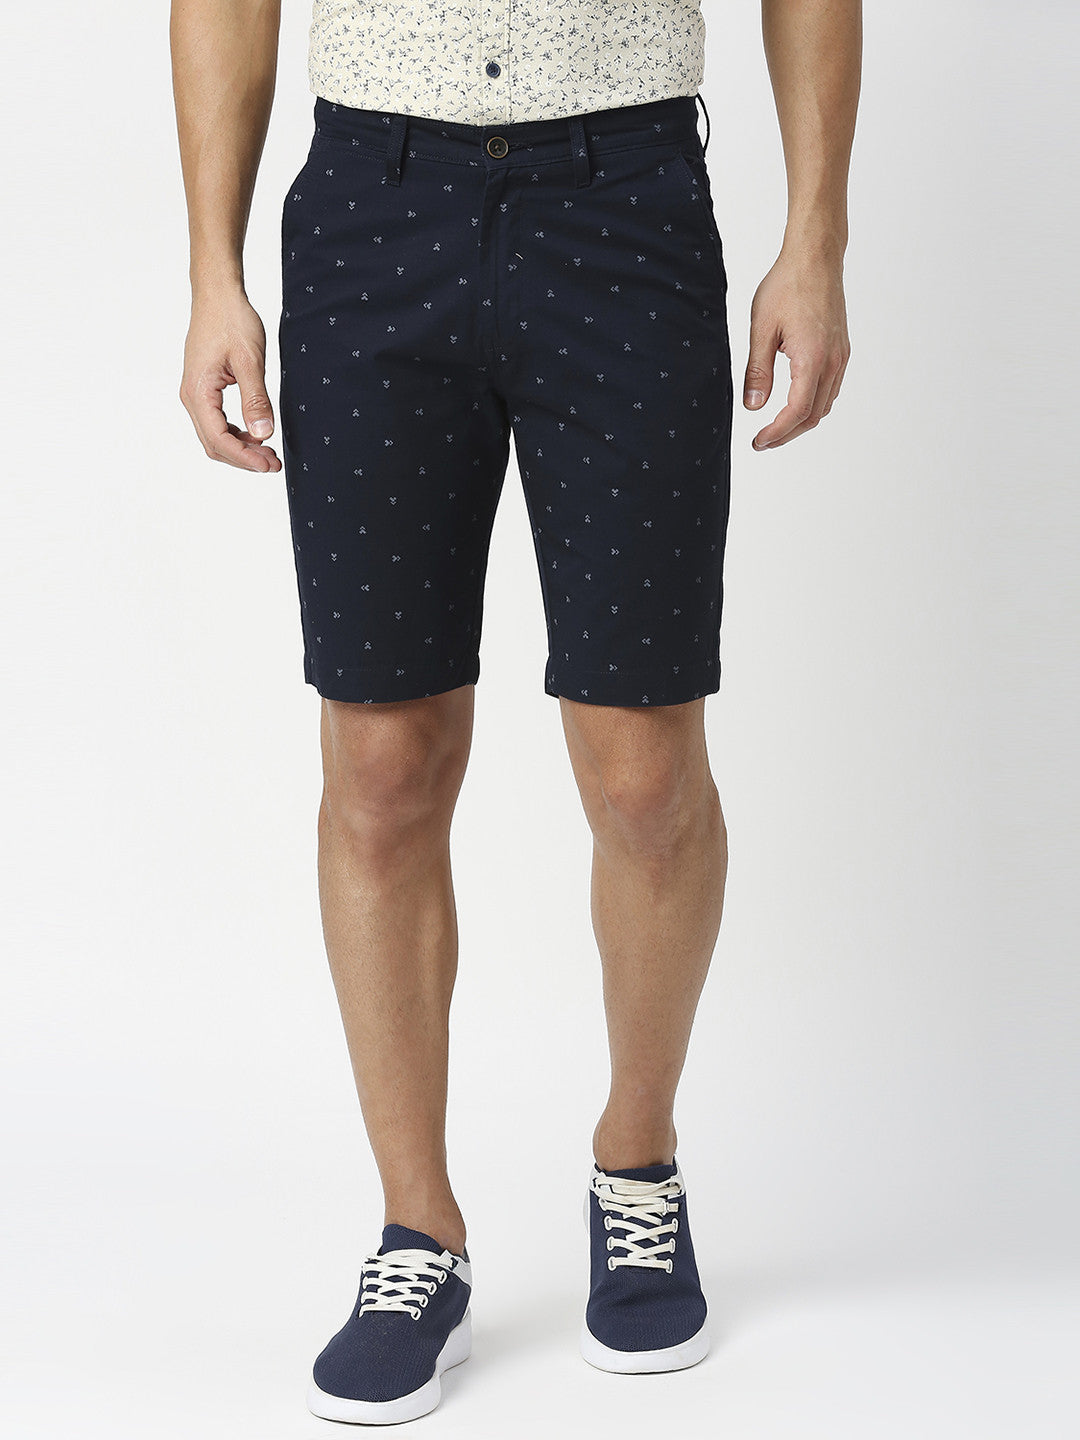 Navy Blue Printed Cotton Shorts